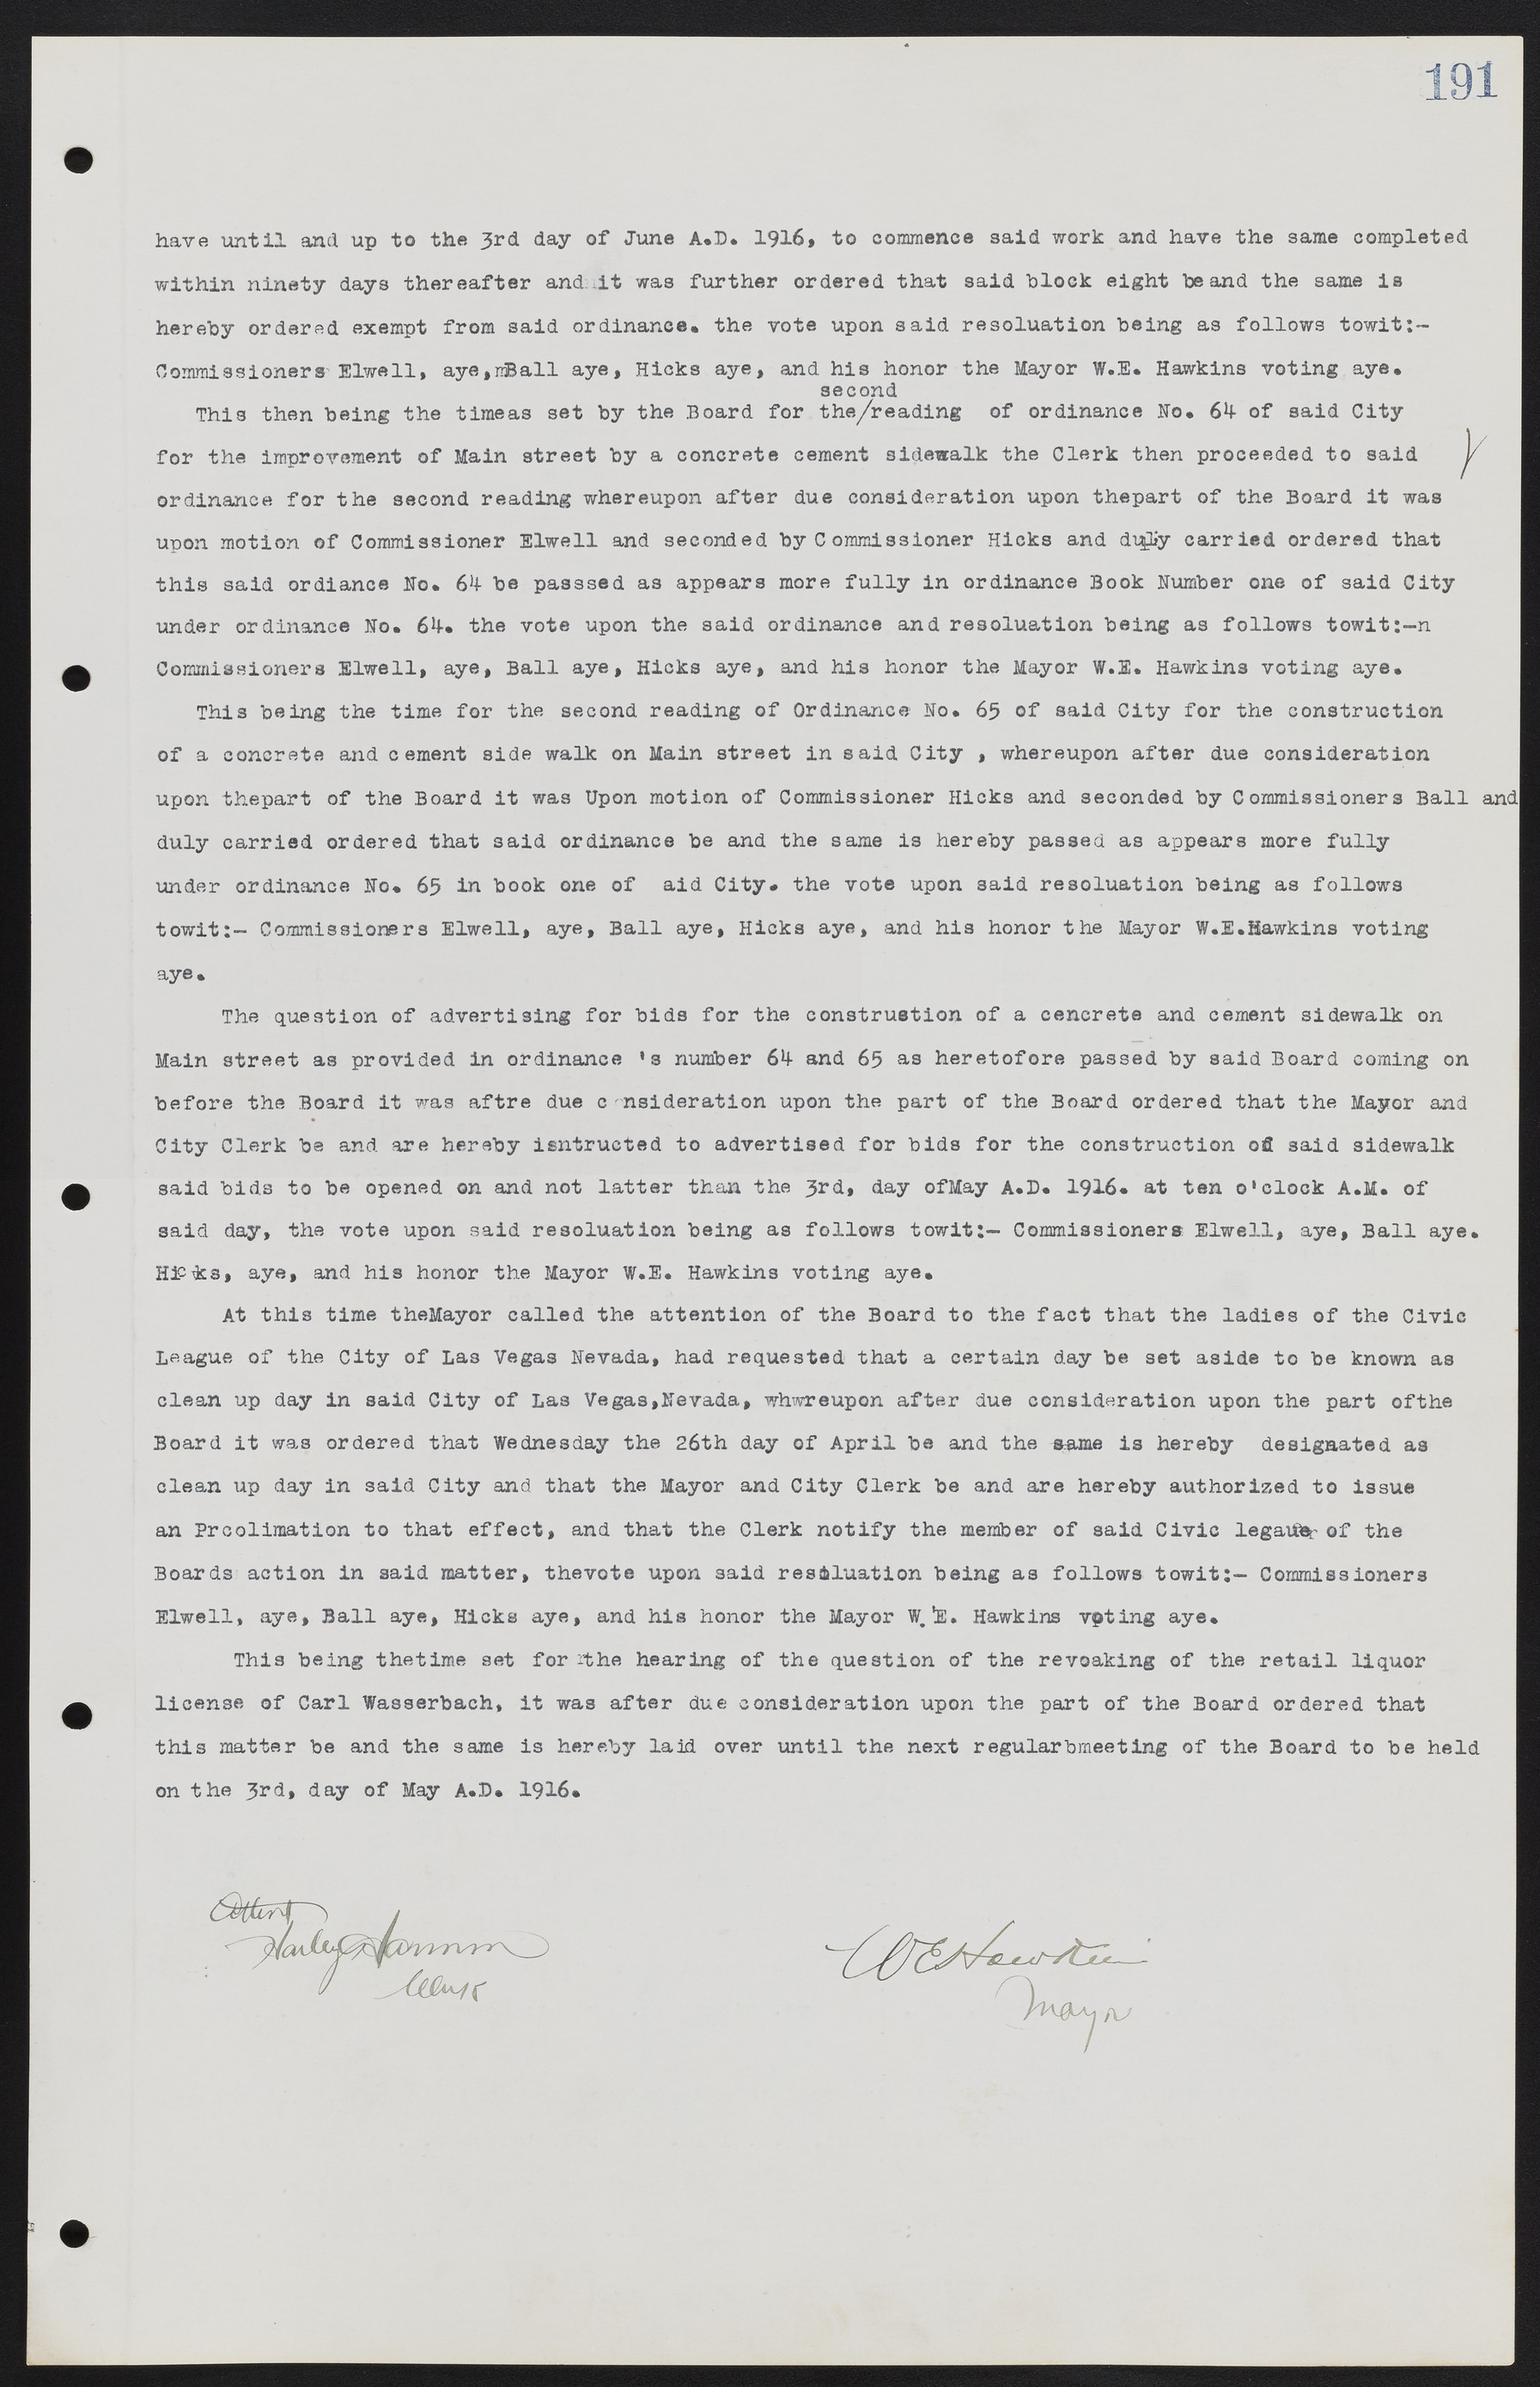 Las Vegas City Commission Minutes, June 22, 1911 to February 7, 1922, lvc000001-207